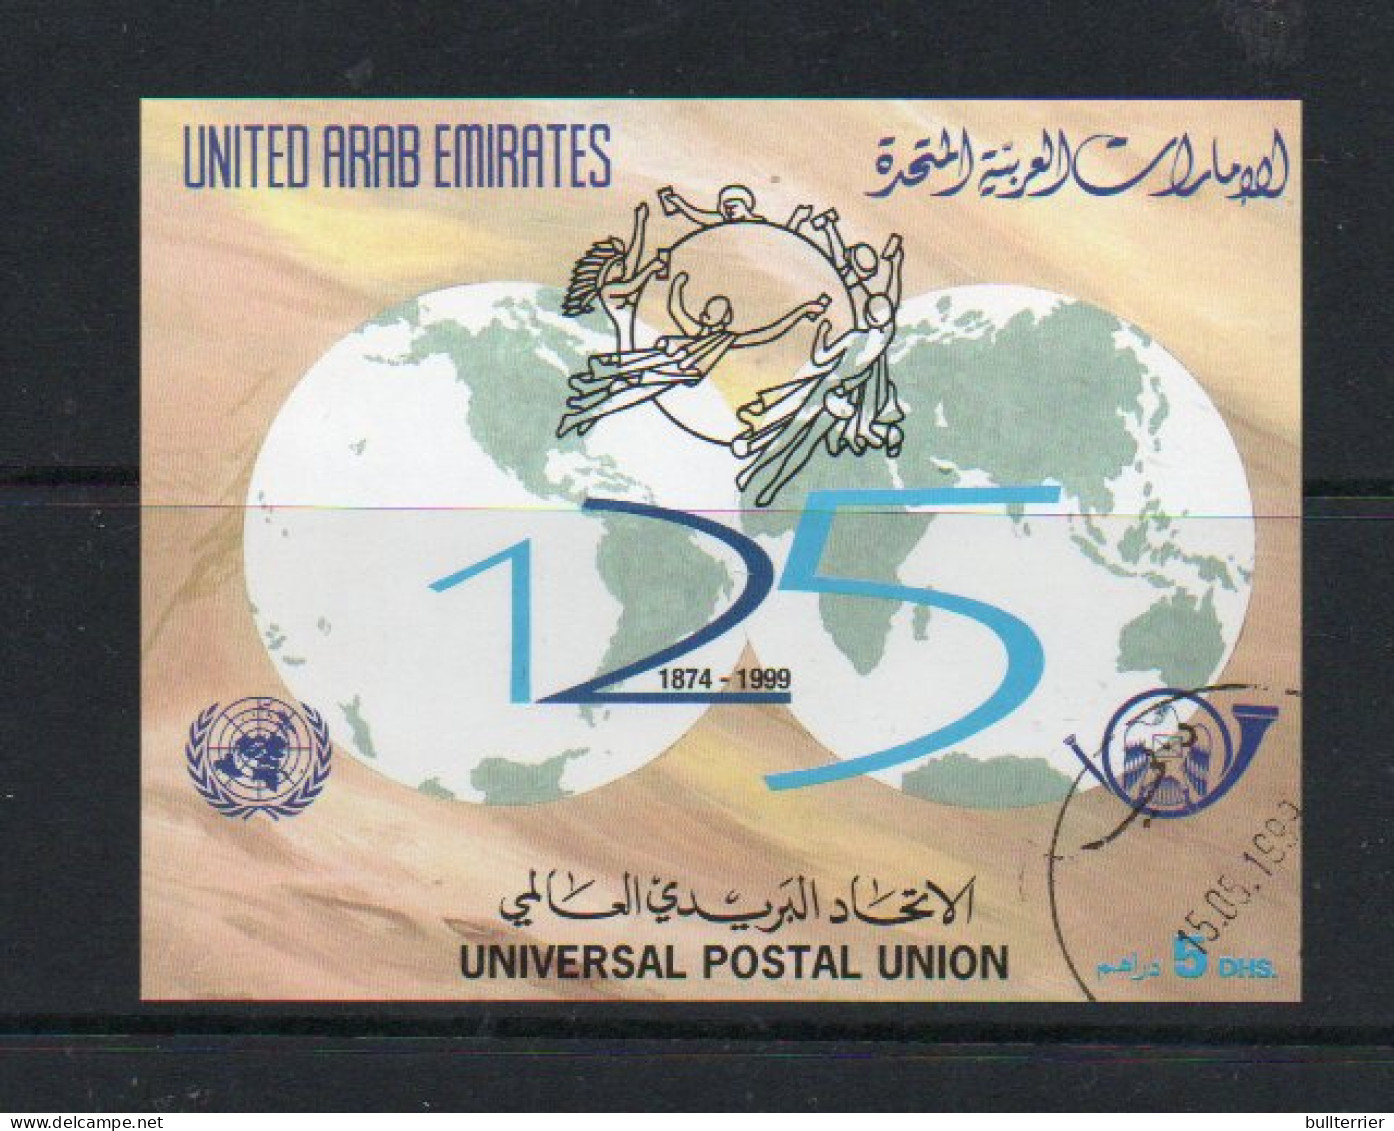 UNITED ARAB EMIRATES - 1999 - UPU SOUVENIR SHEET FINE USED  - Verenigde Arabische Emiraten